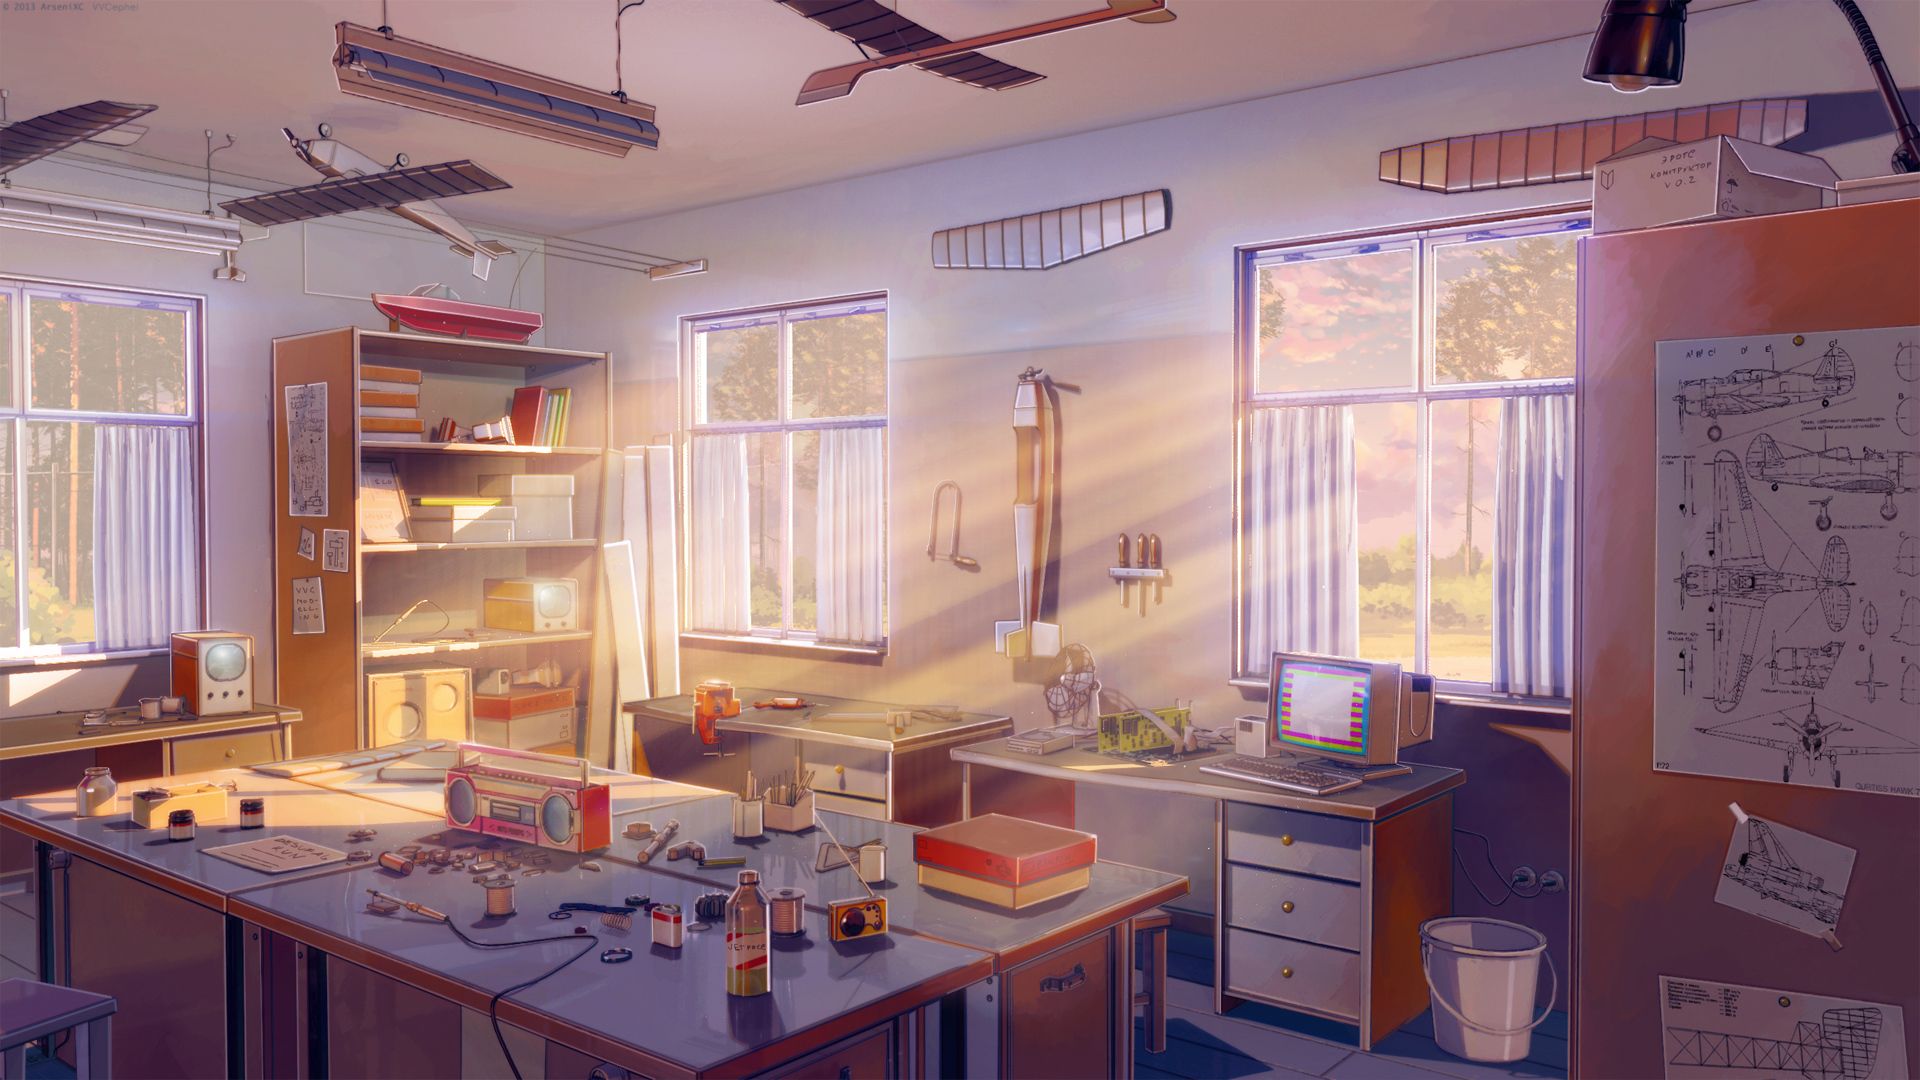 Anime Kitchen Background Images  Free Download on Freepik